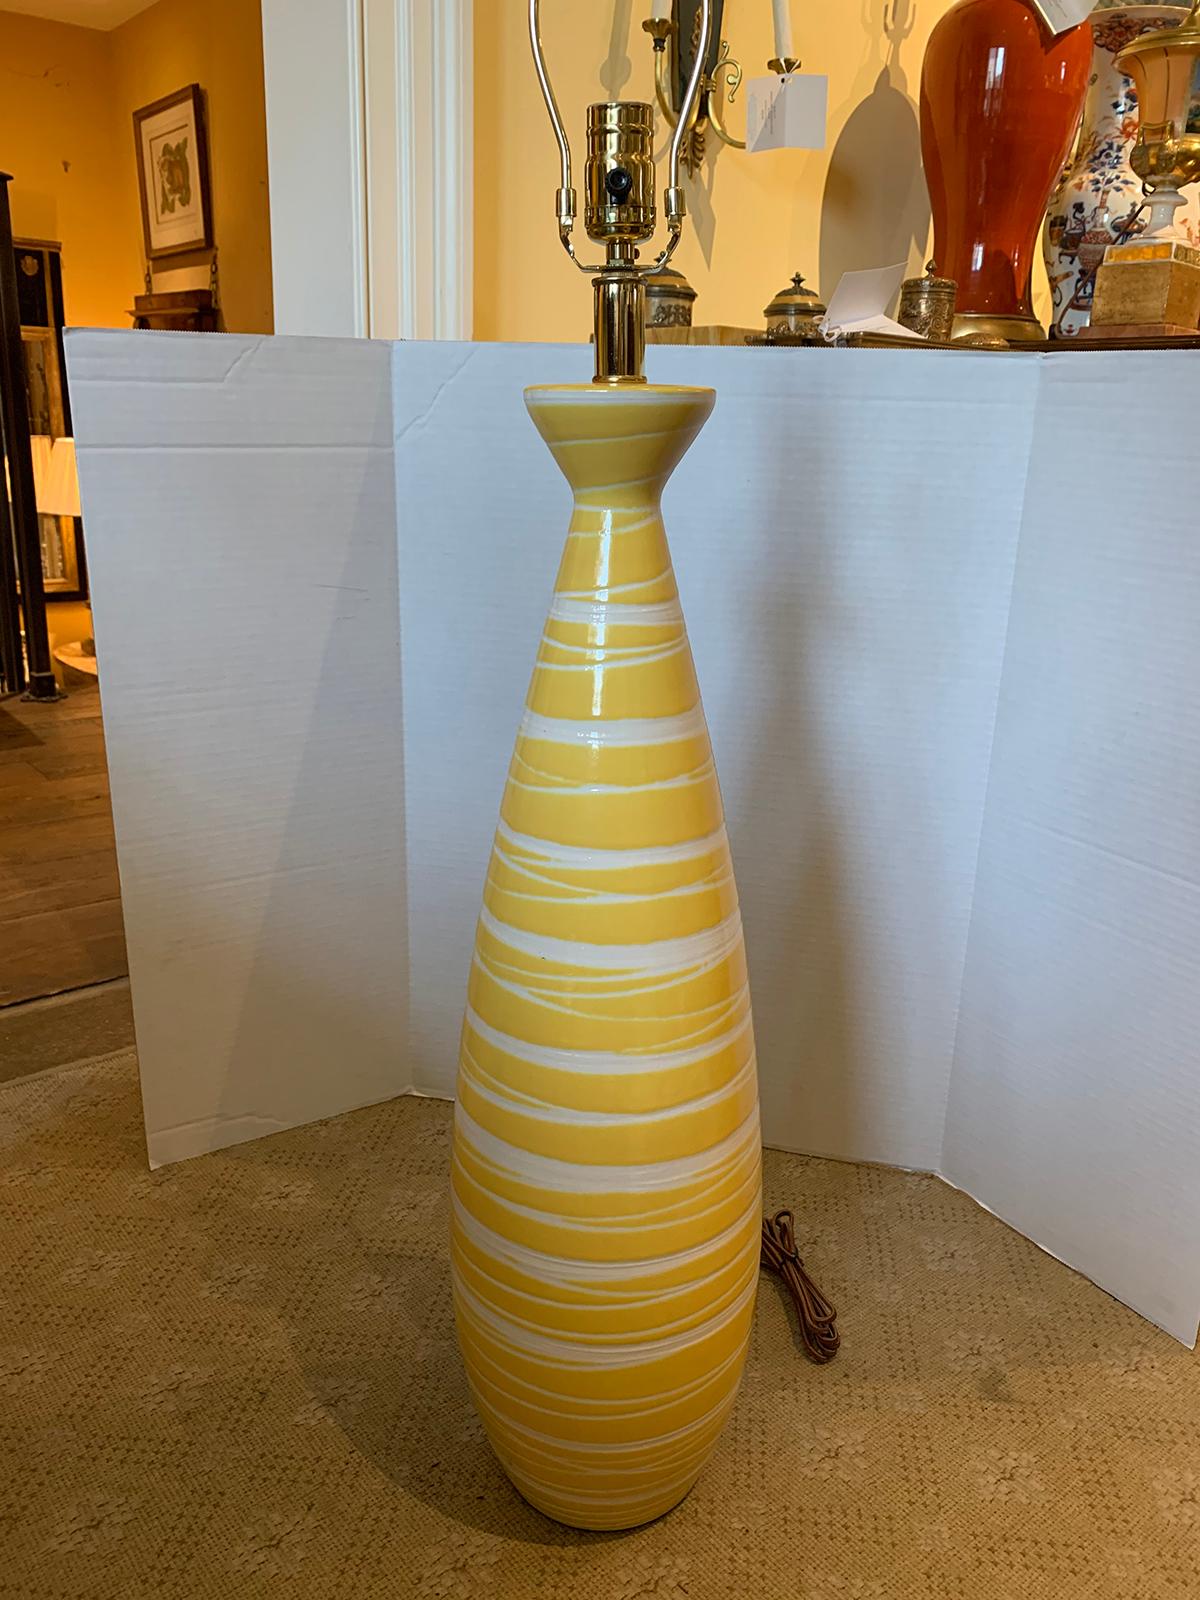 Mid-20th century Italian yellow and white swirl glazed pottery lamp
new wiring.